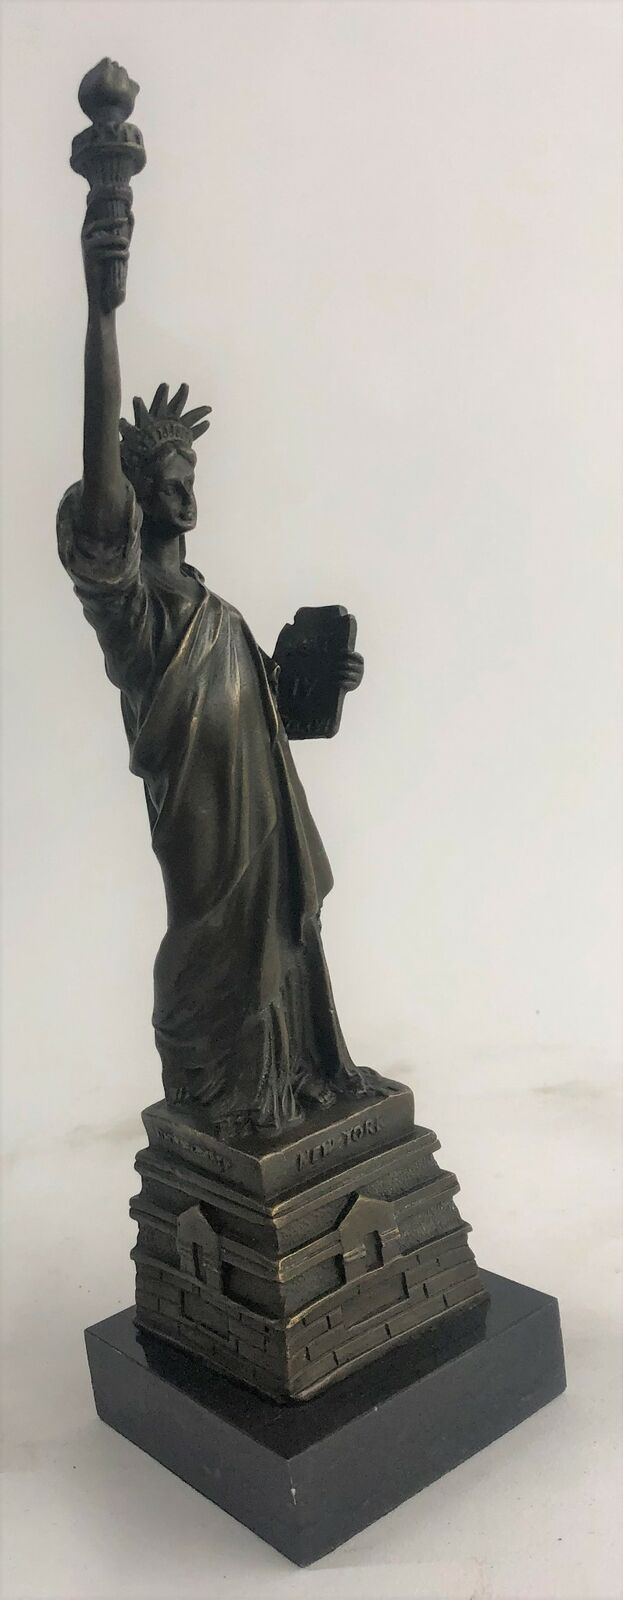 Statue of Liberty NYC New York City Gift Memorabilia 100% Bronze Sculpture Deal